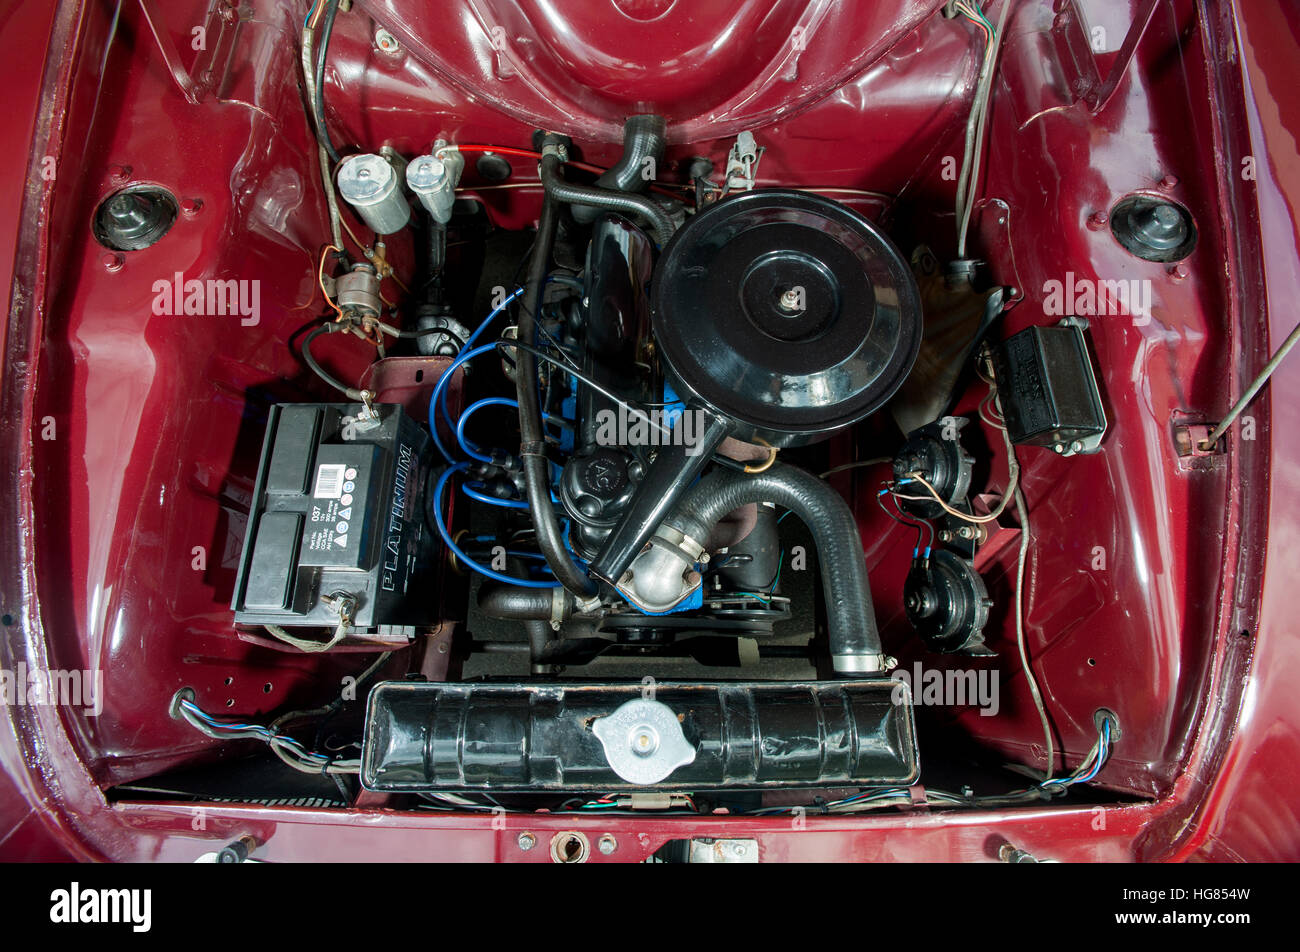 1965 Ford Cortina Estate classic car engine Stock Photo - Alamy